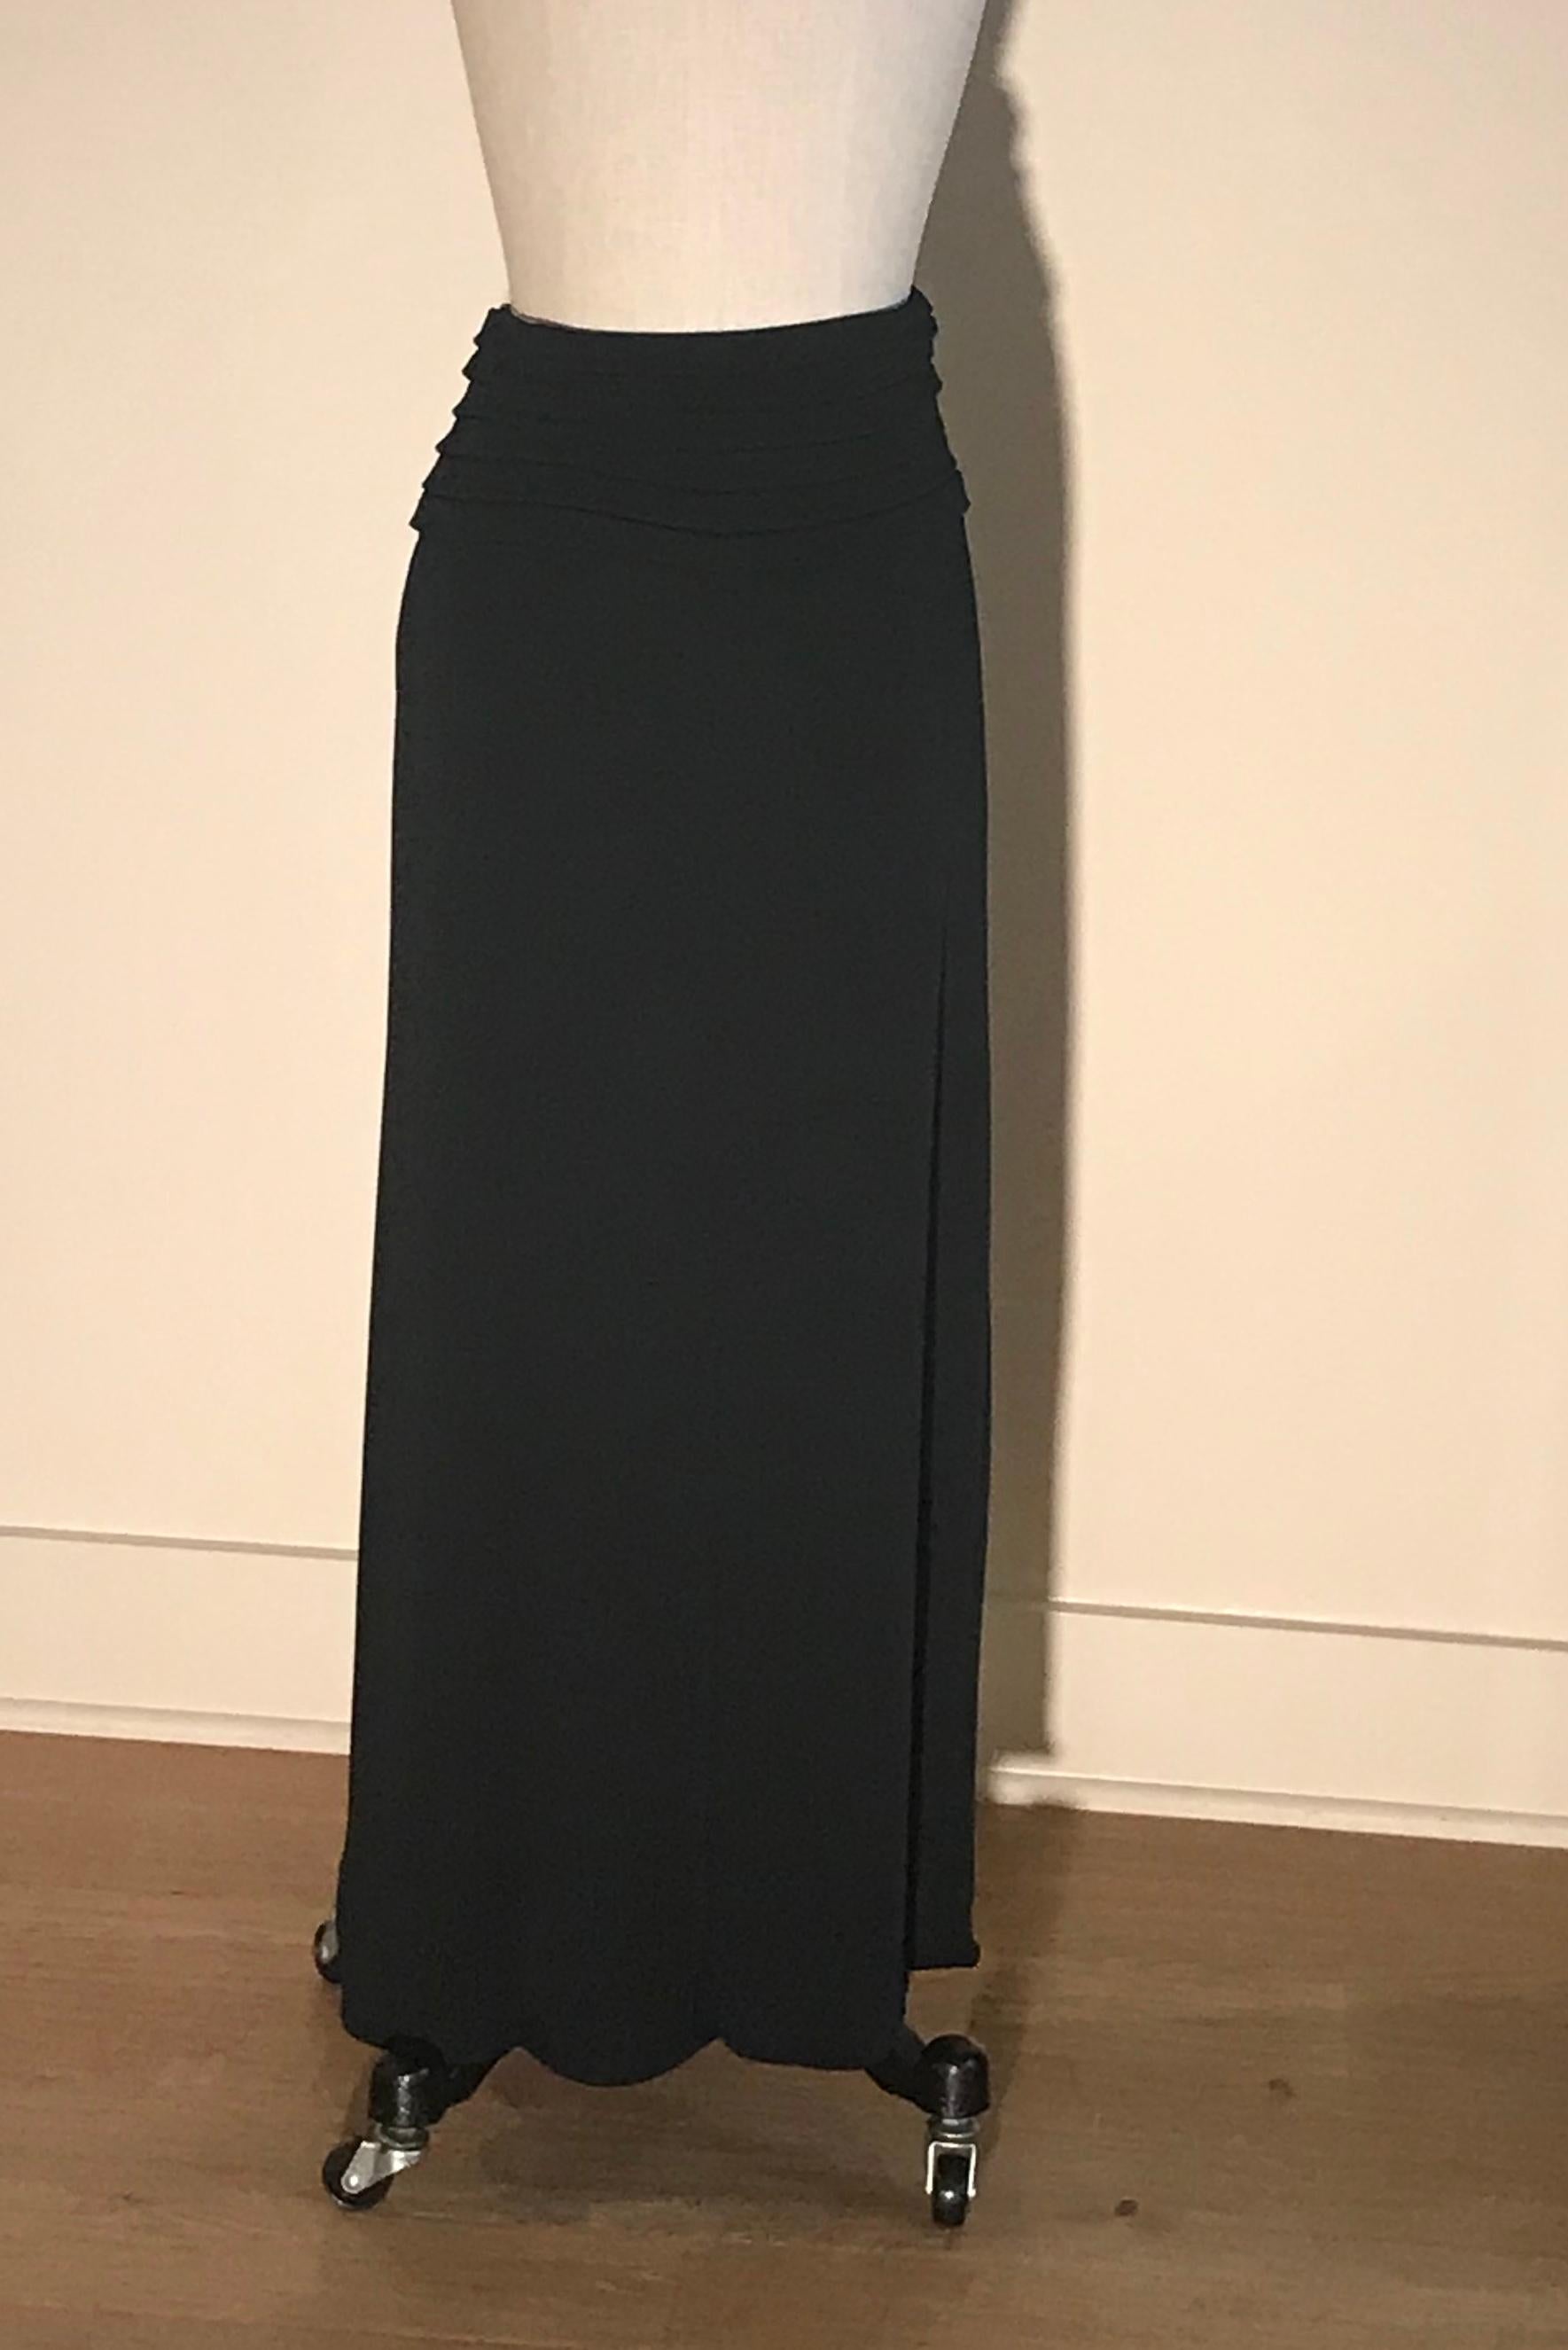 Giorgio Armani Black Midi Skirt with Horizontal Pleat Detail at Waist ...